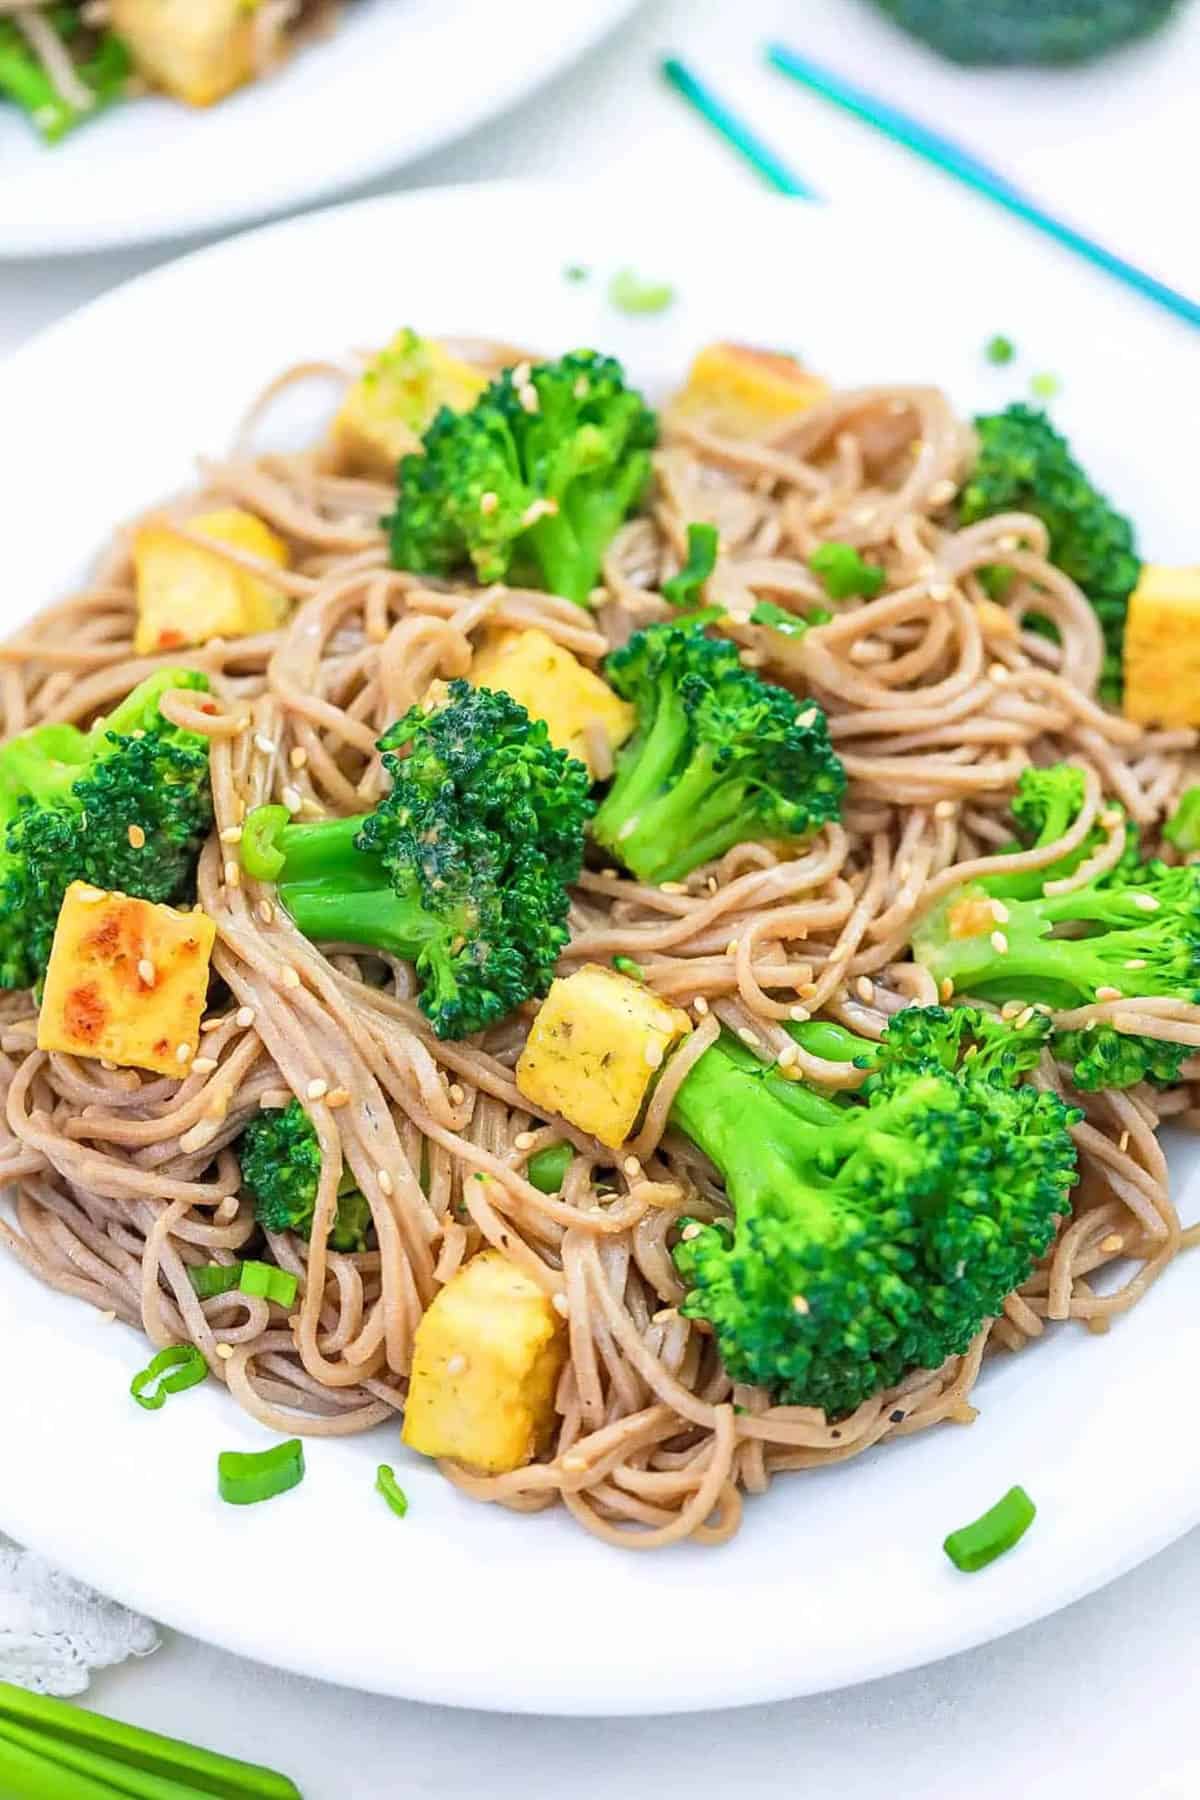 Tofu broccoli stir fry with sesame noodles served on a white plate.